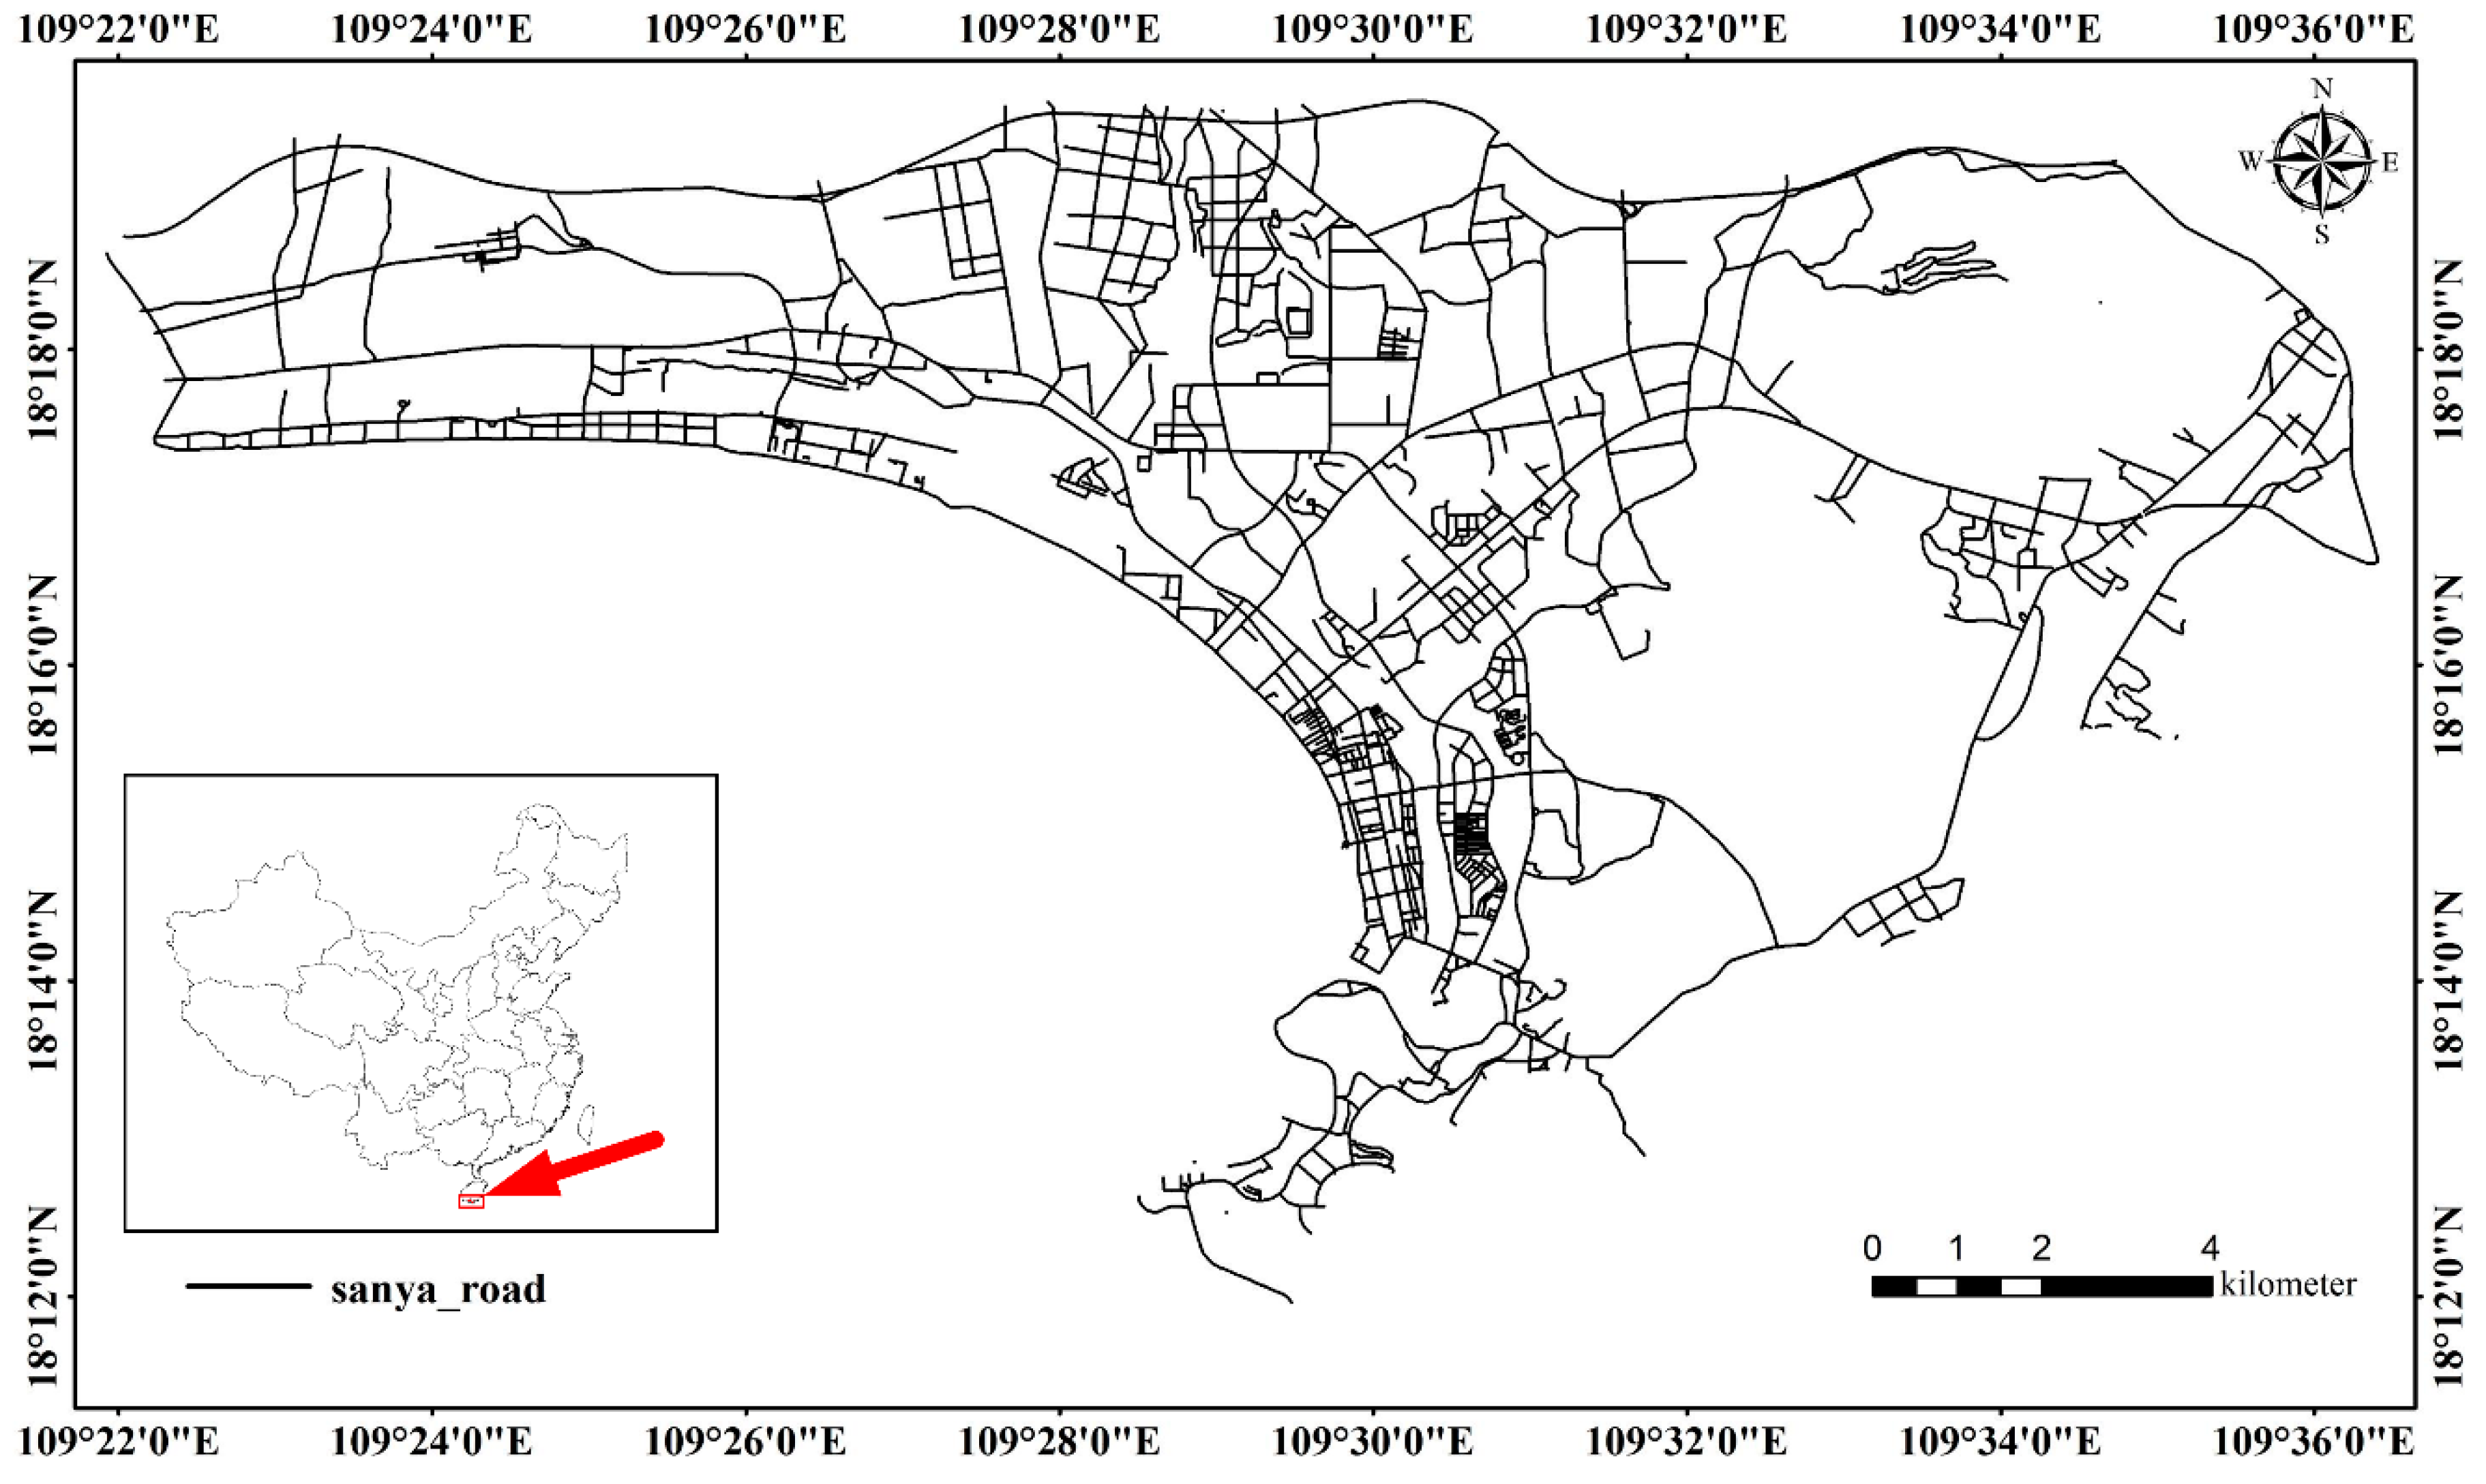 Luckow City Map